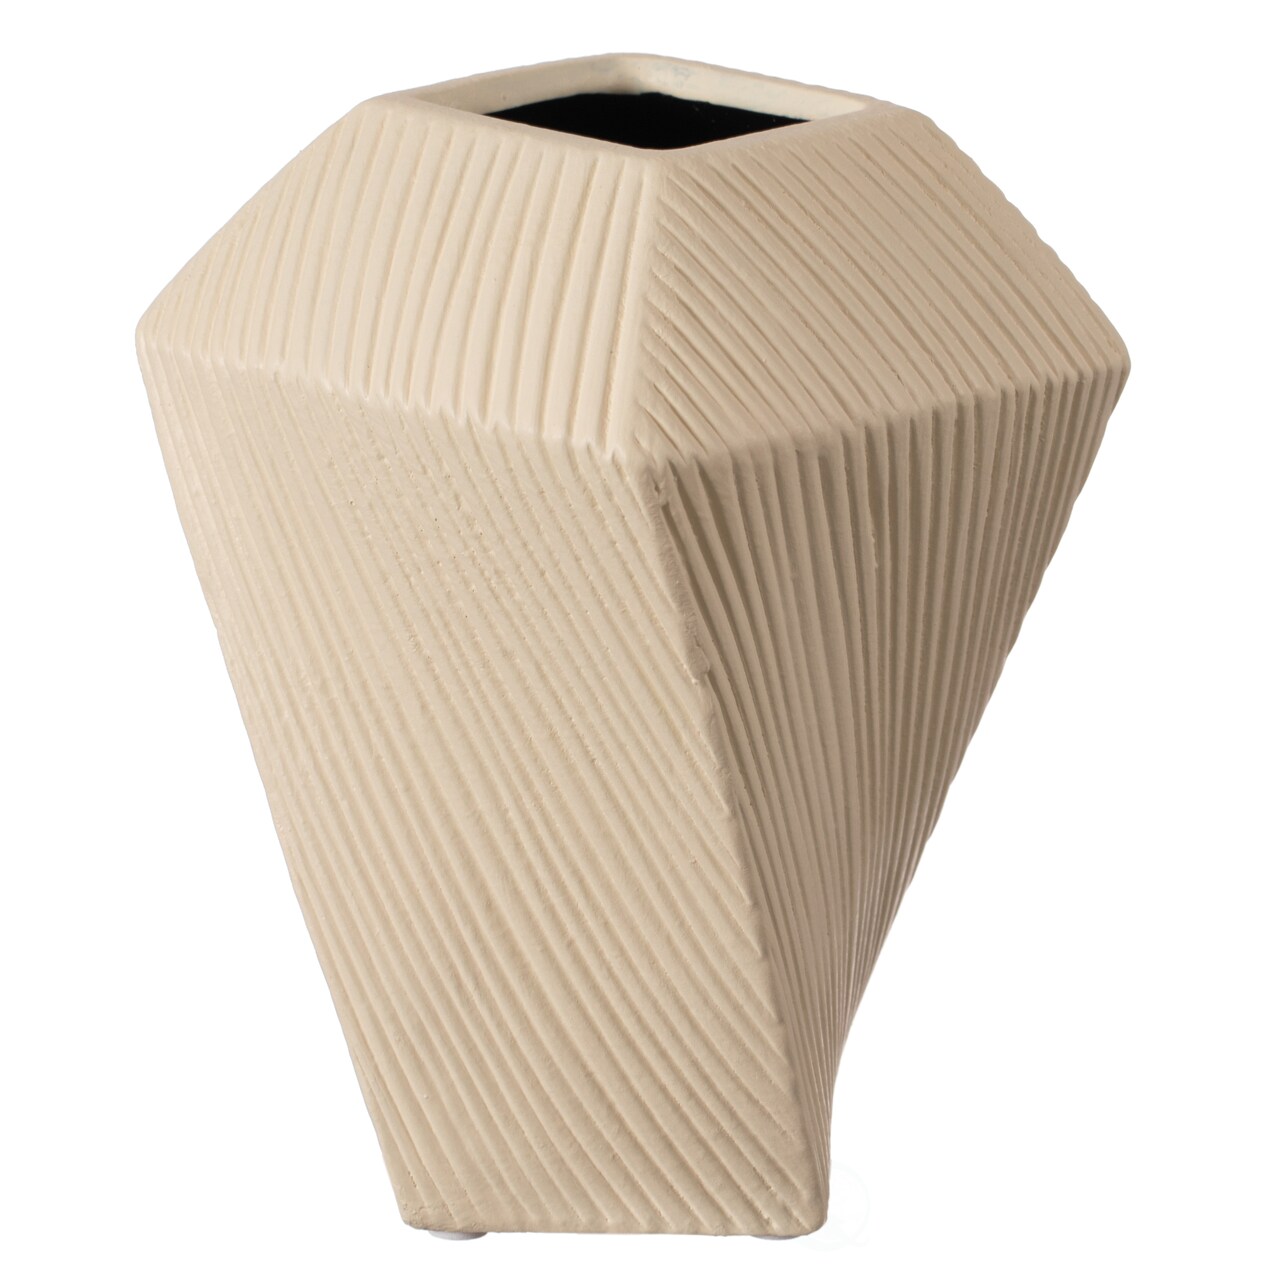 Decorative Ceramic Square Twisted Centerpiece Table Vase